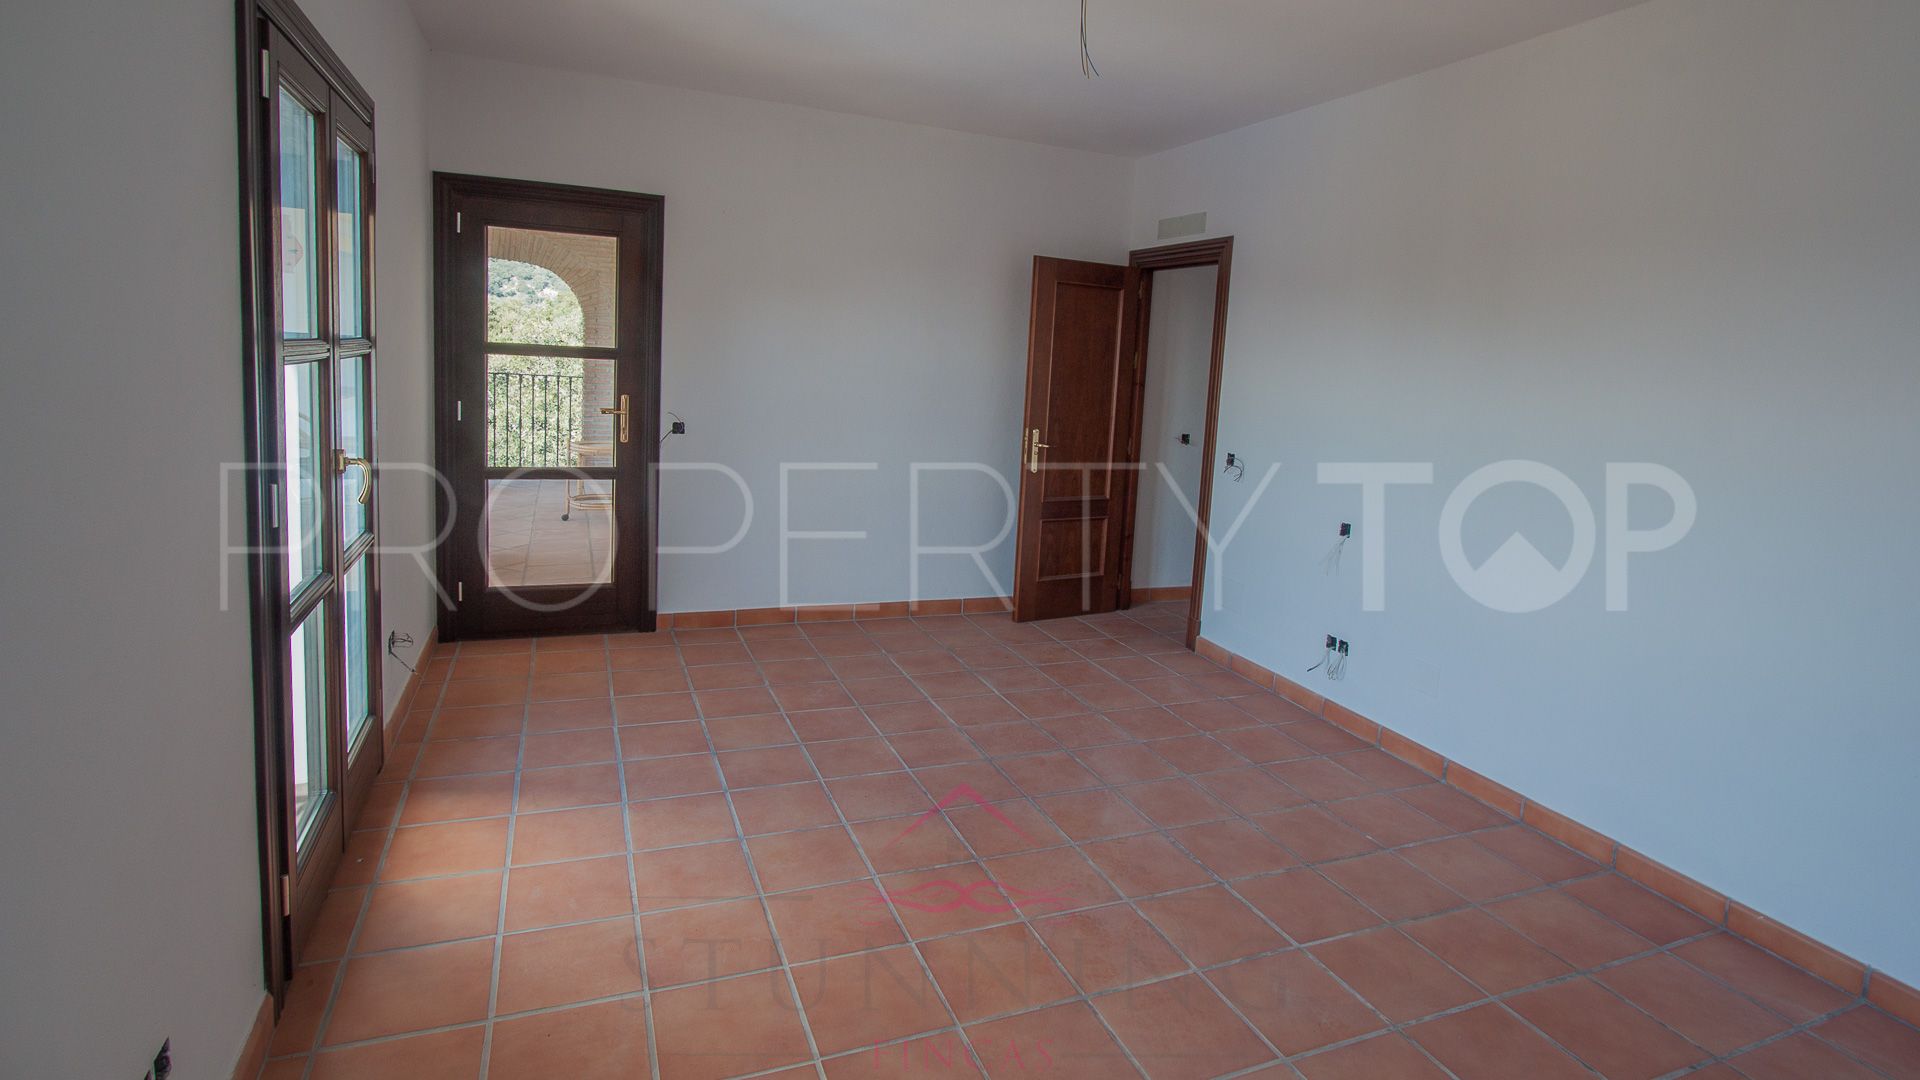 For sale finca in Casares Montaña with 4 bedrooms